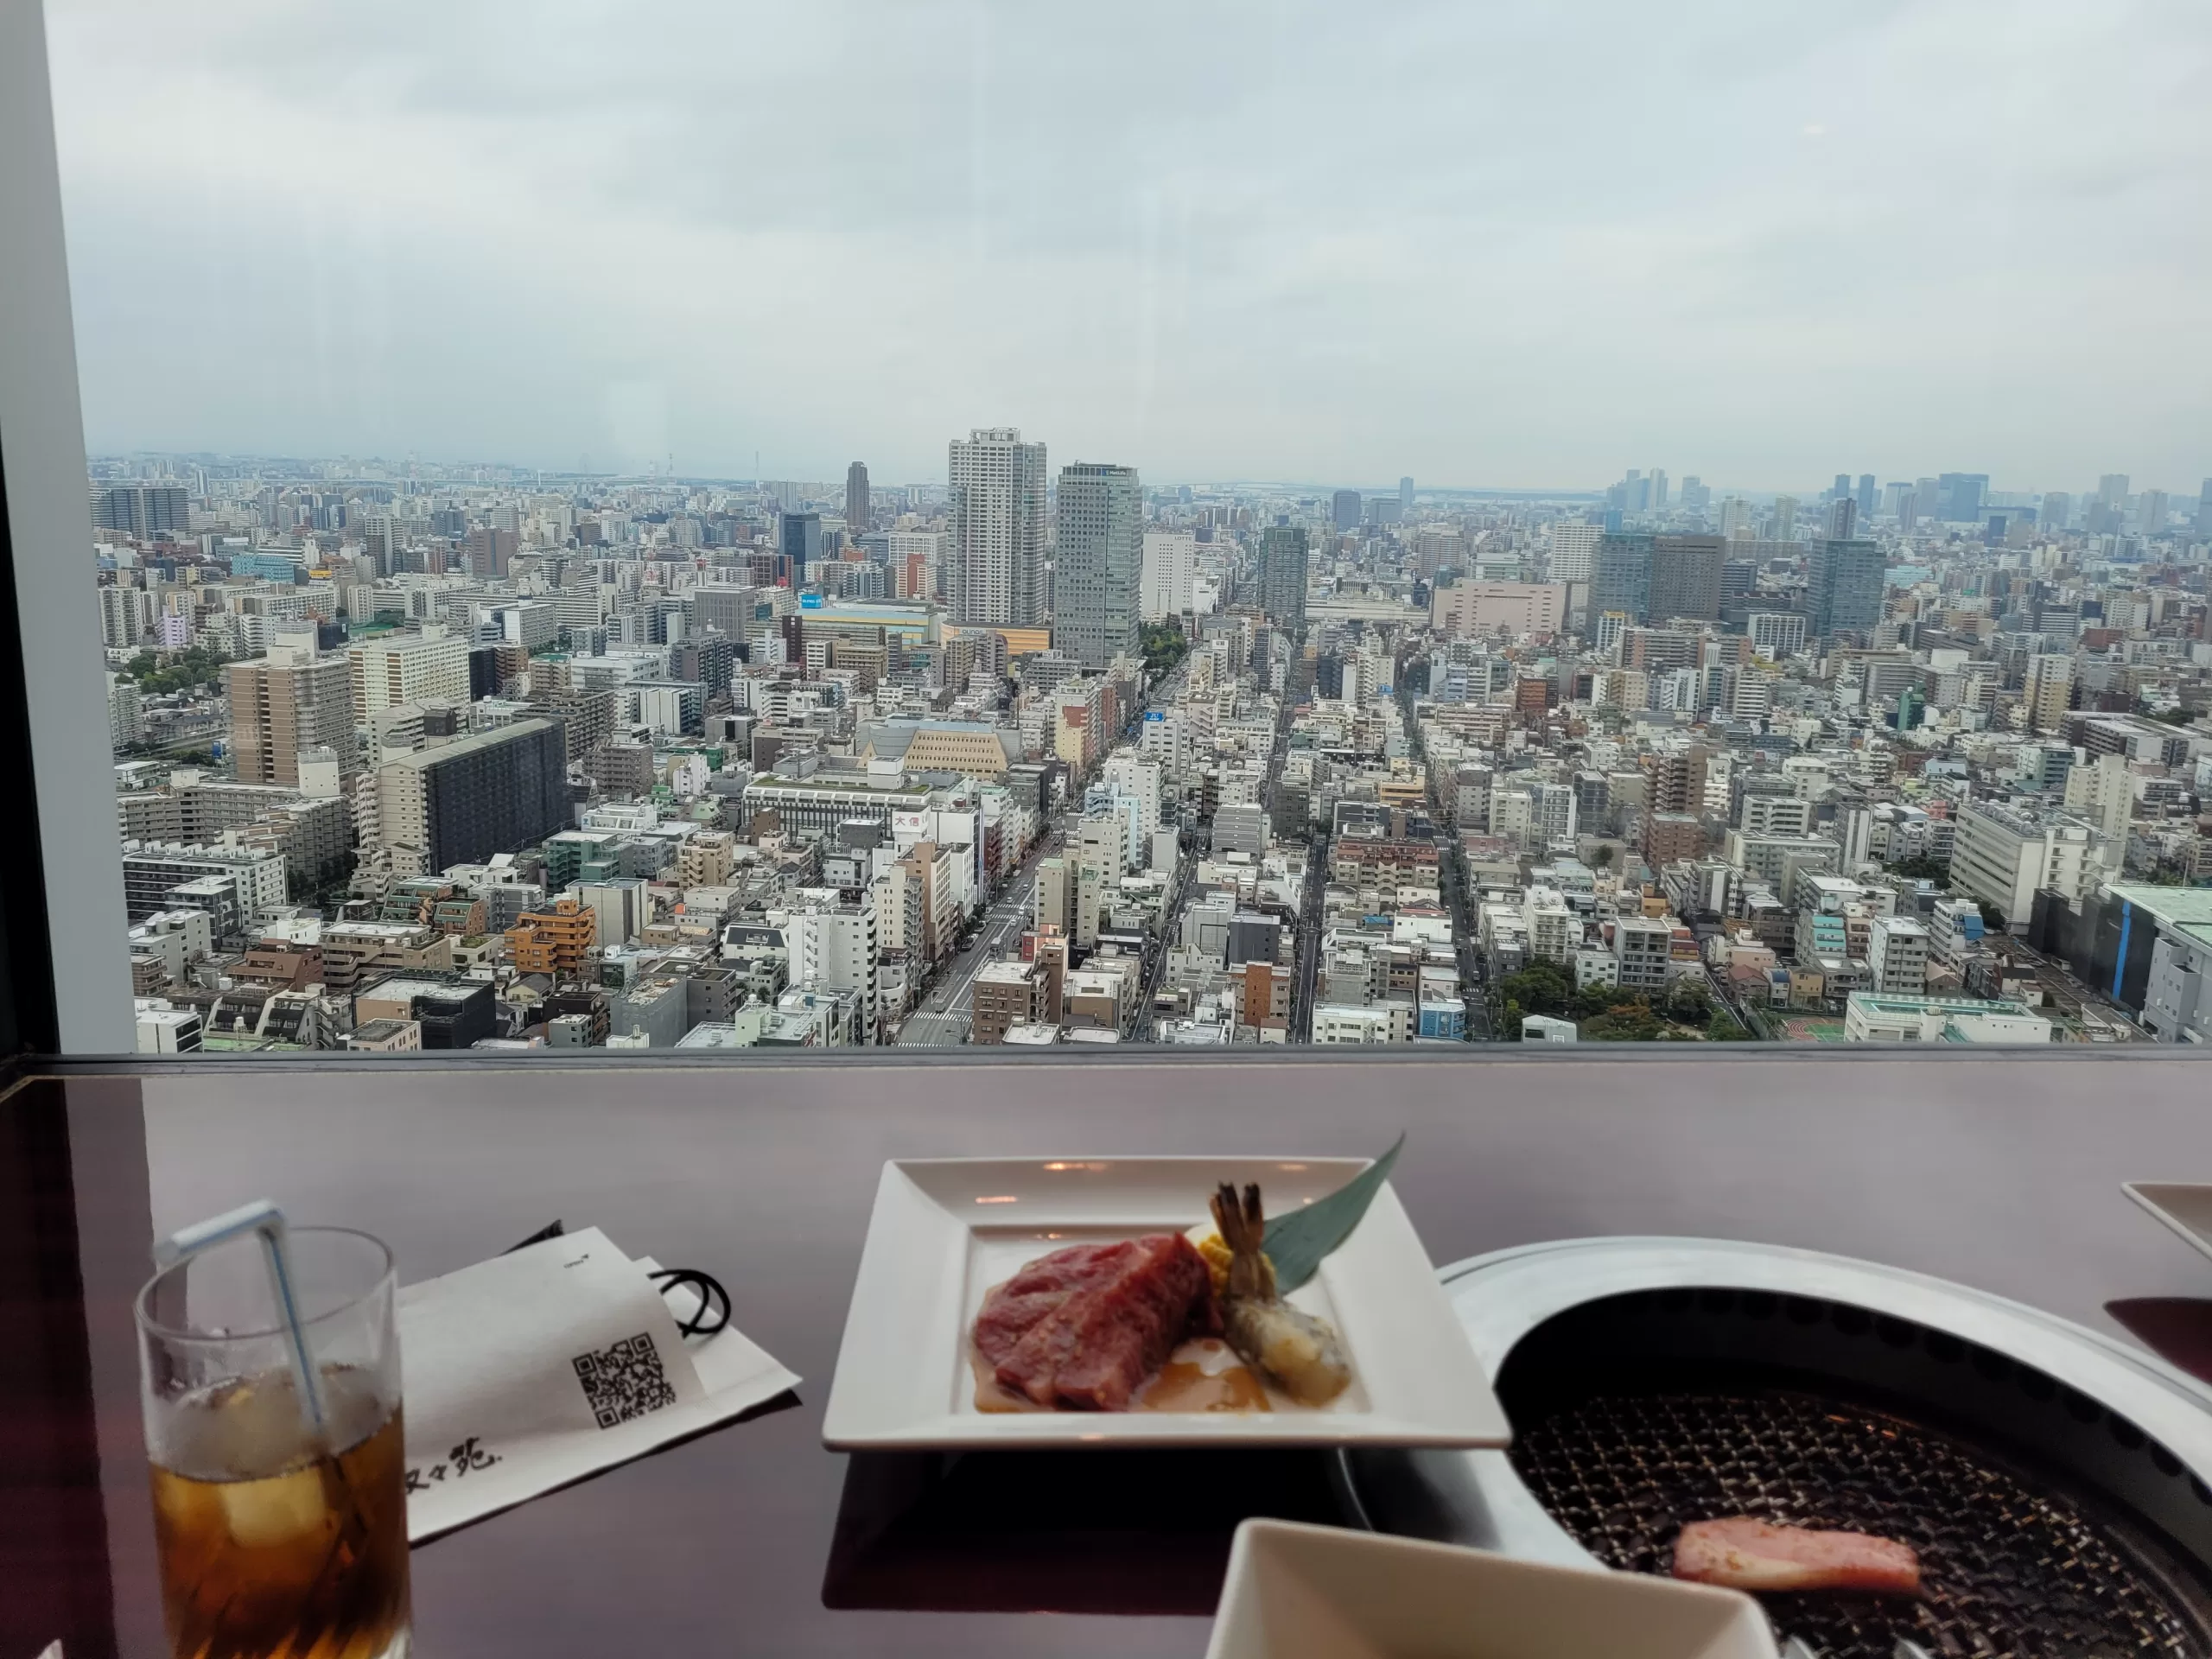 Jojoen Tokyo Skytree Town is the best way to experience Asakusa